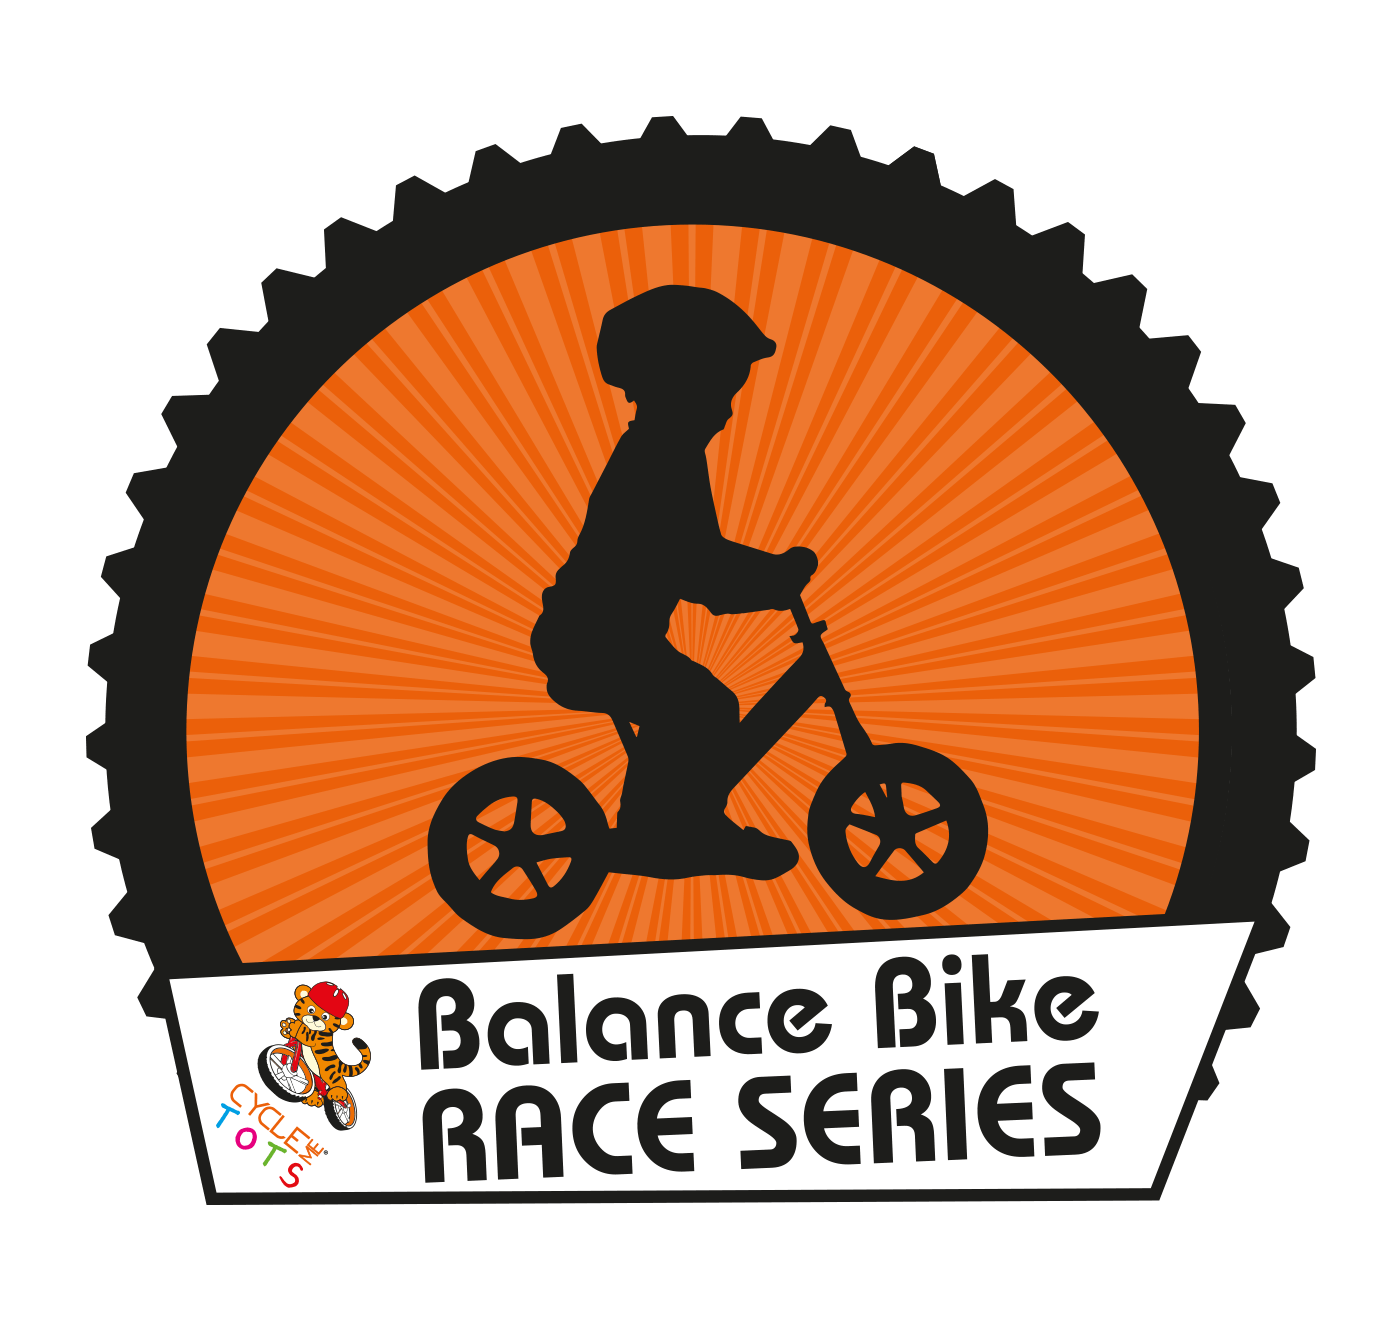 Balance bike Race Series